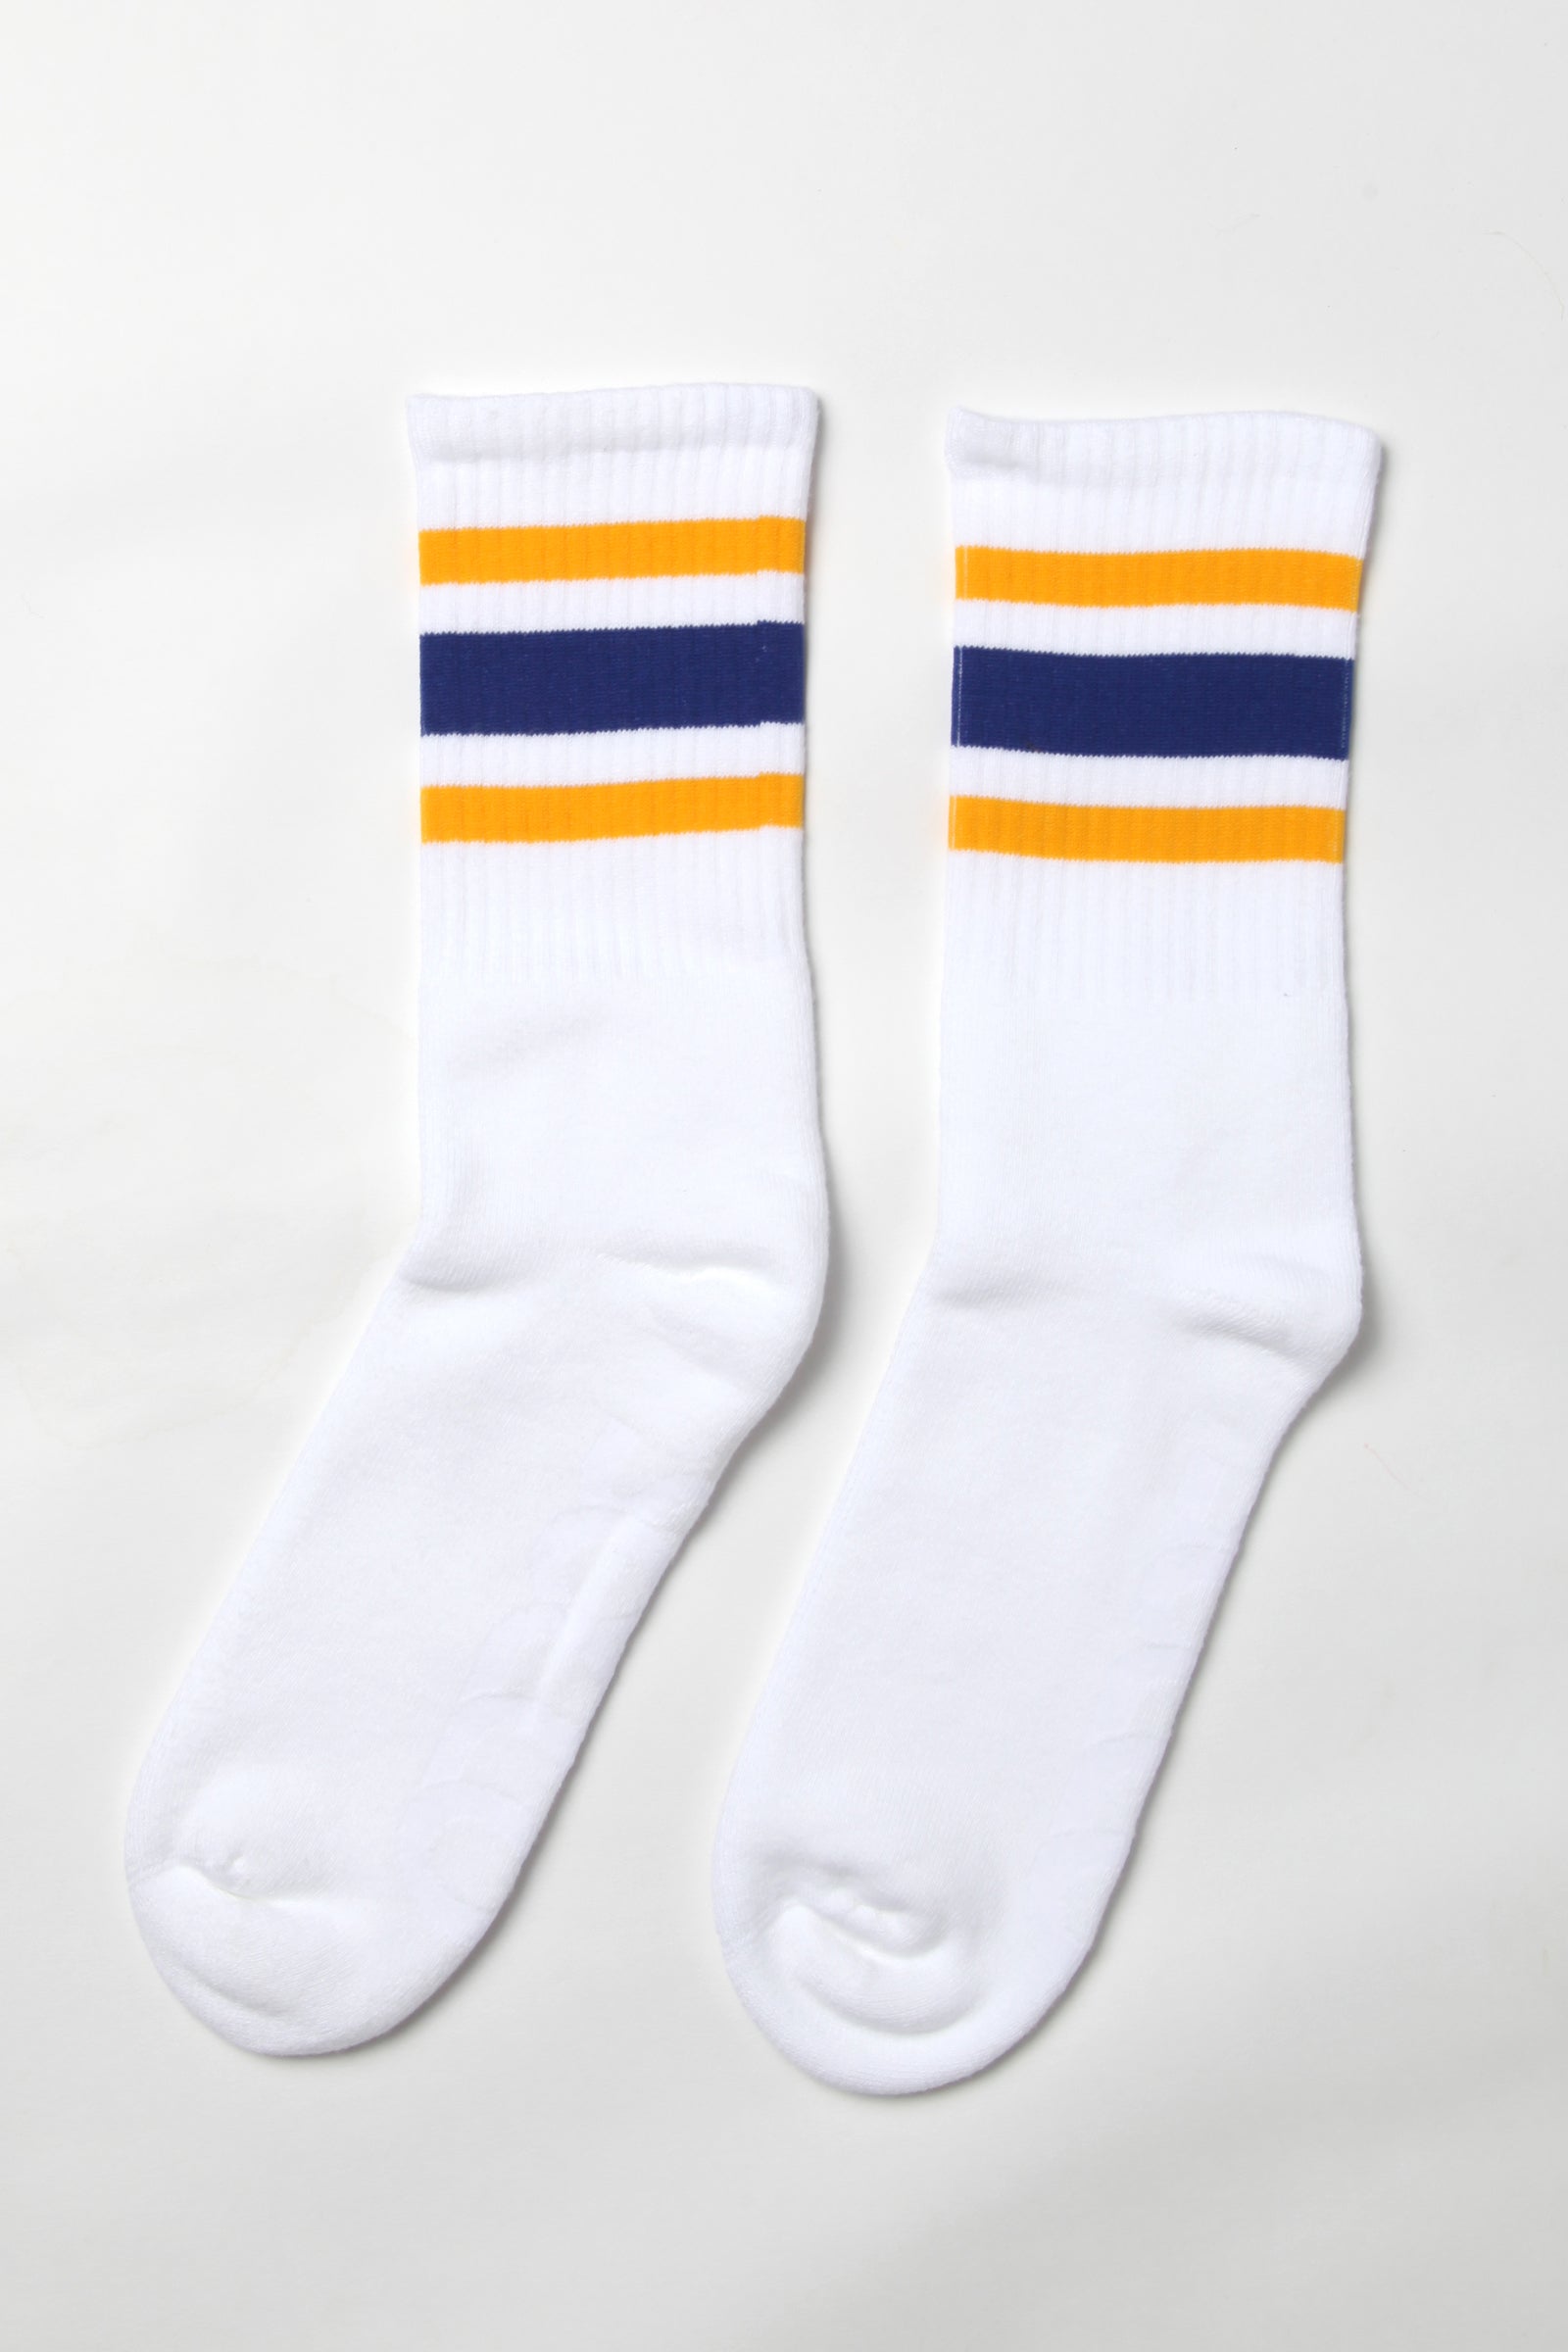 Socco - Striped Crew Socks - Blue/Yellow/White